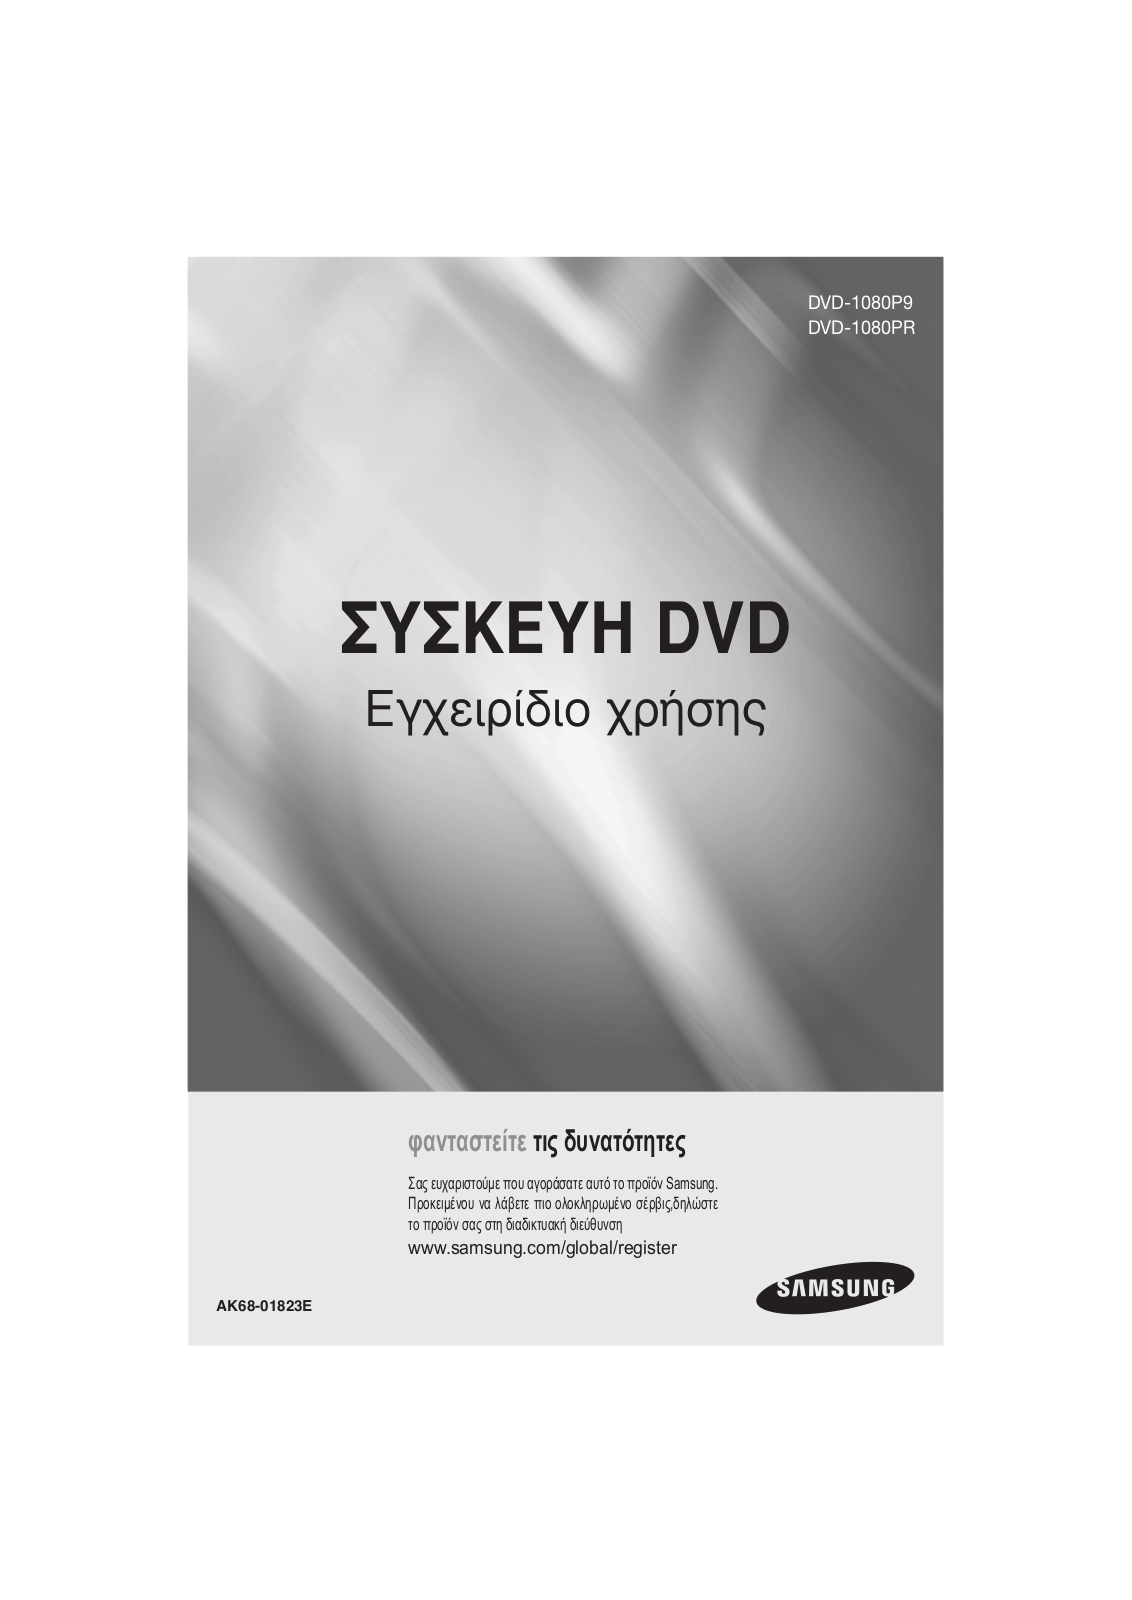 Samsung DVD-1080P9 User Manual